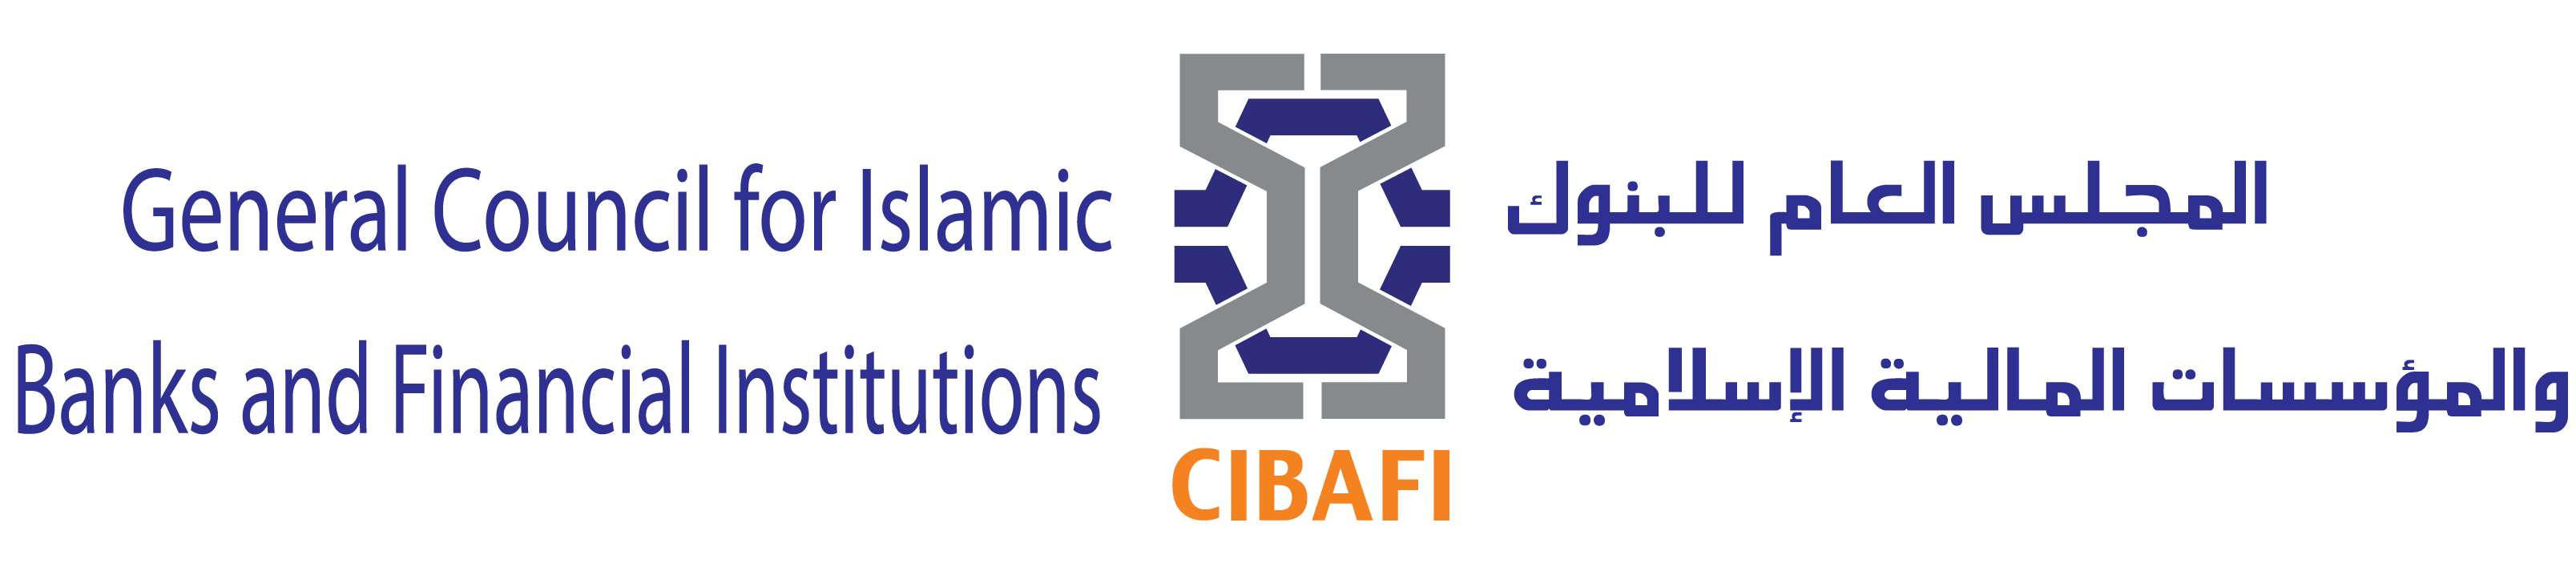 logo-cibafi.png